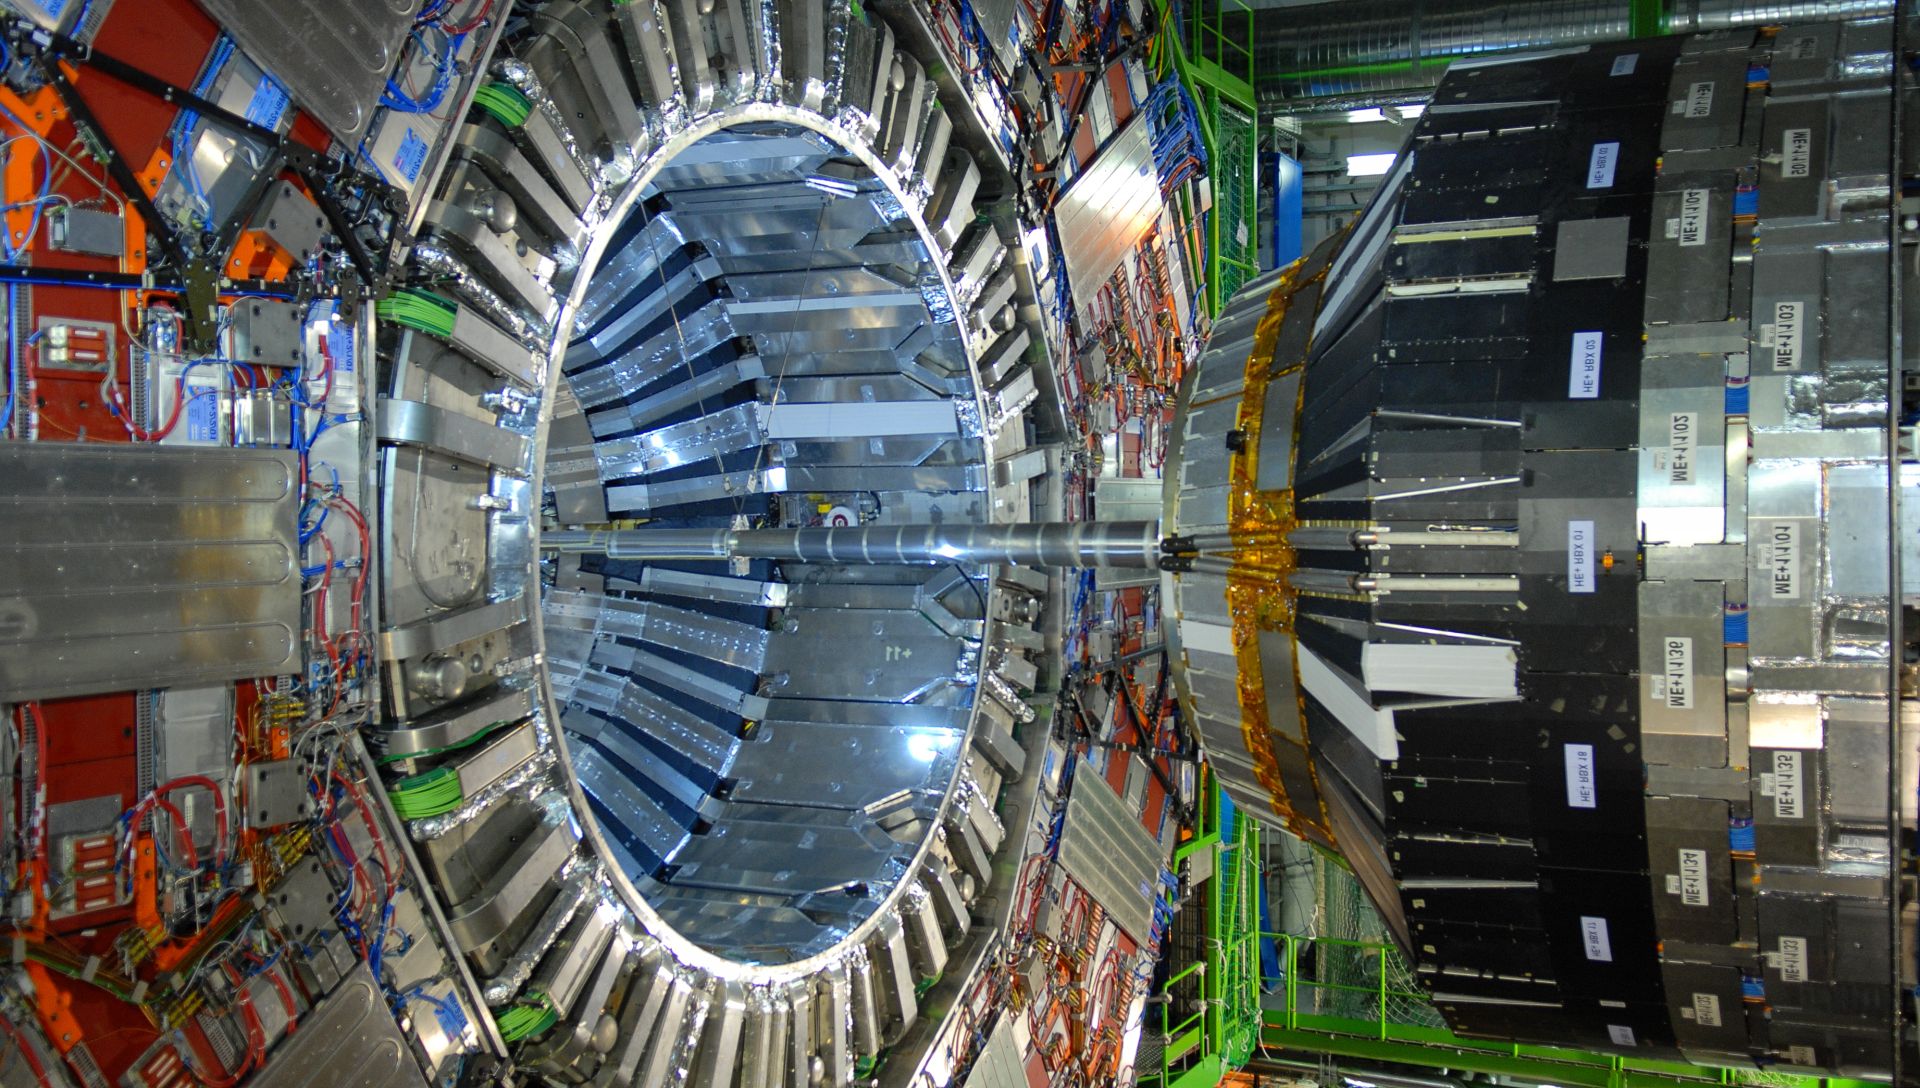 Самая большая частица. ЦЕРН коллайдер. Большой адронный коллайдер ЦЕРН. Швейцария ЦЕРН коллайдер. Адронный коллайдер в Женеве.